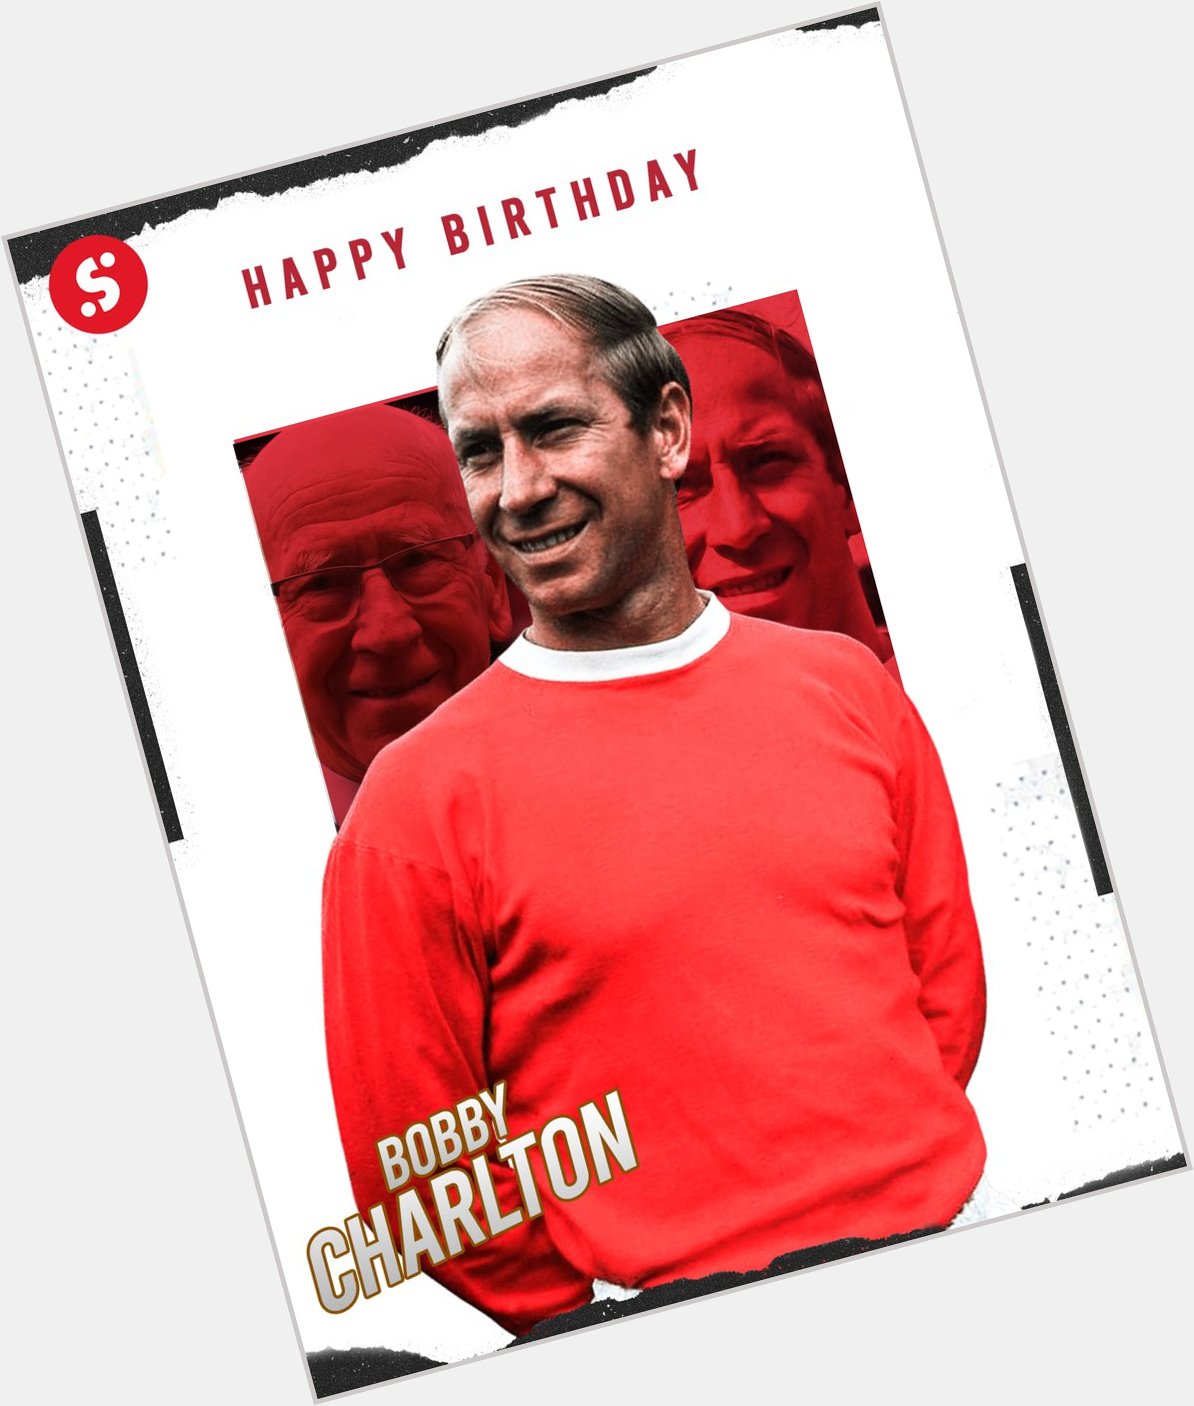 Happy birthday to Sir Bobby Charlton, who turns 8  5  today! Legend           